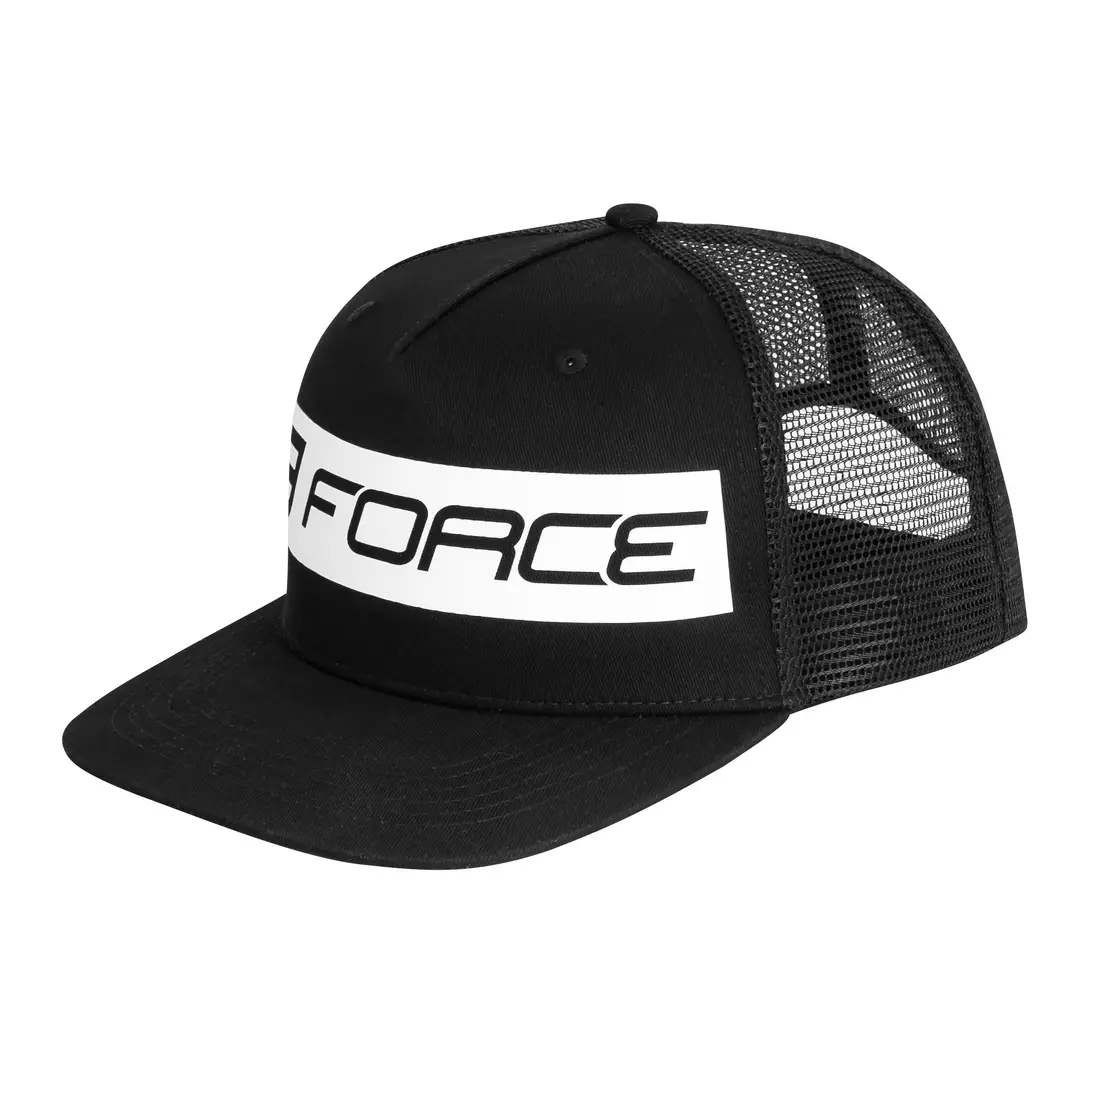 FORCE Baseball cap TRUCKER STRAP, black and white 9030807